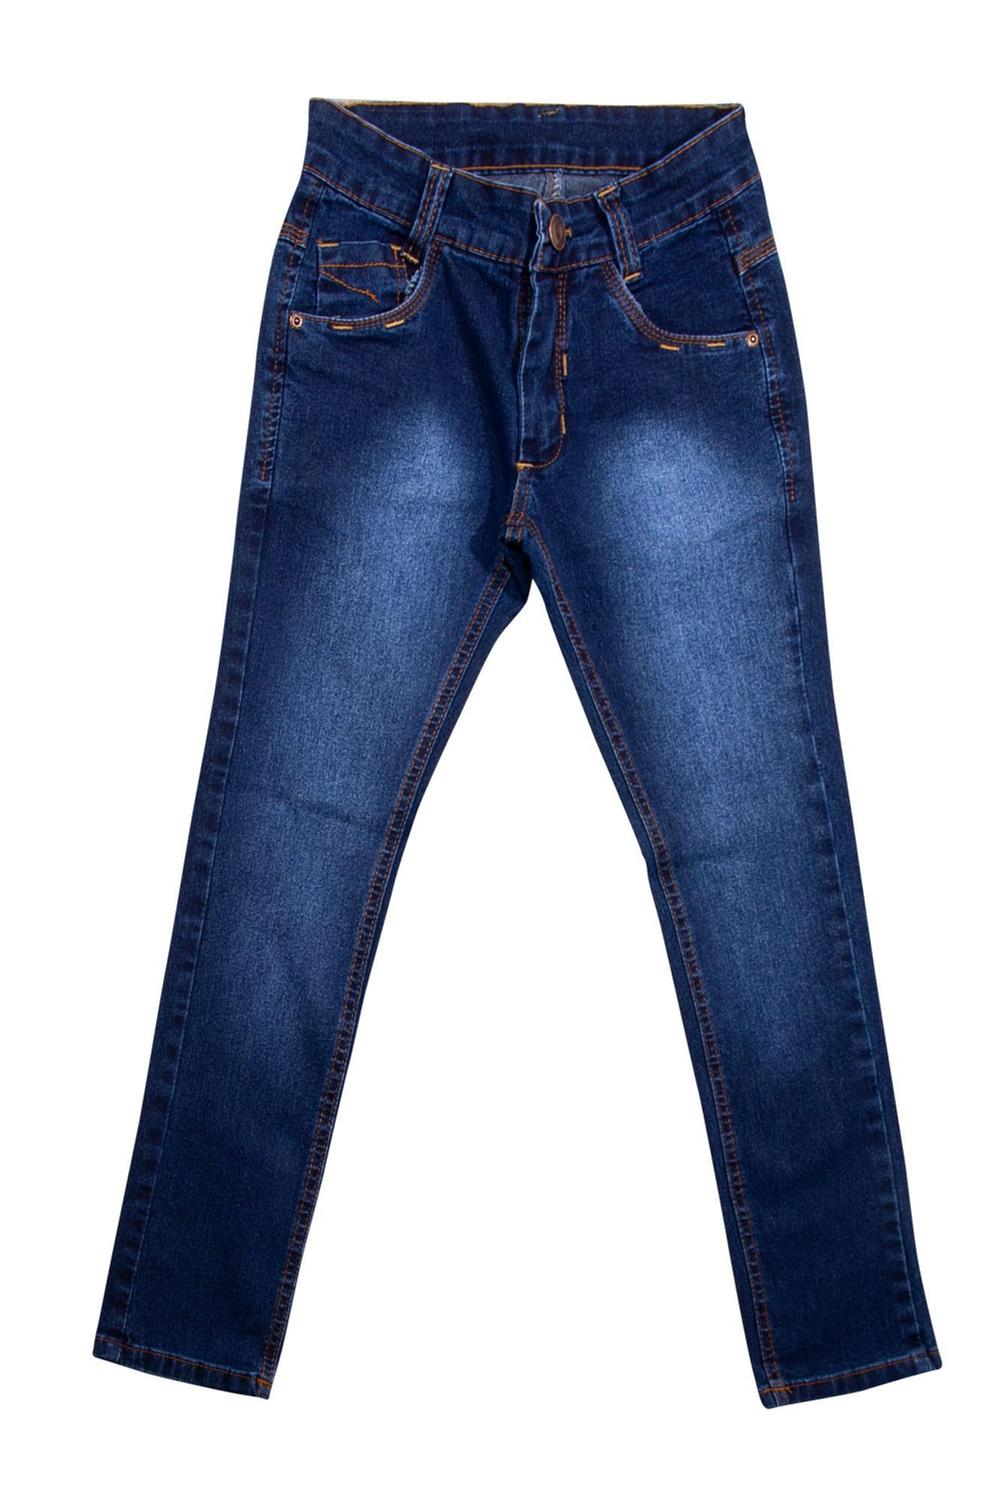 calça jeans masculina tamanho 3